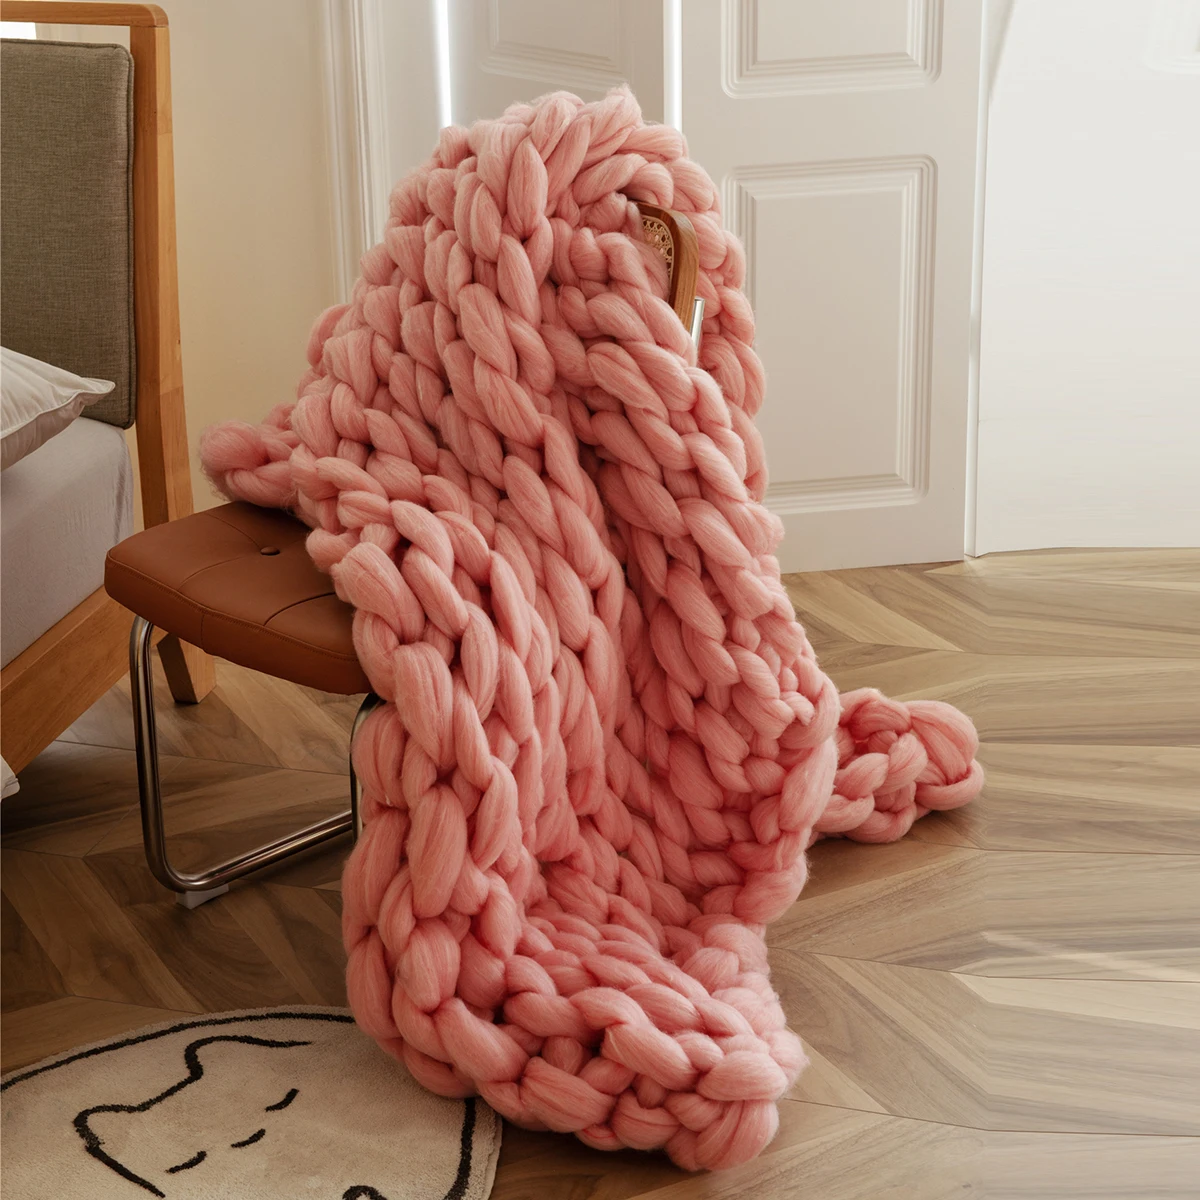 King Blanket Large Chunky Wool Yarn Throw Hand Woven Plaid Warm Sofa Bed Cover 